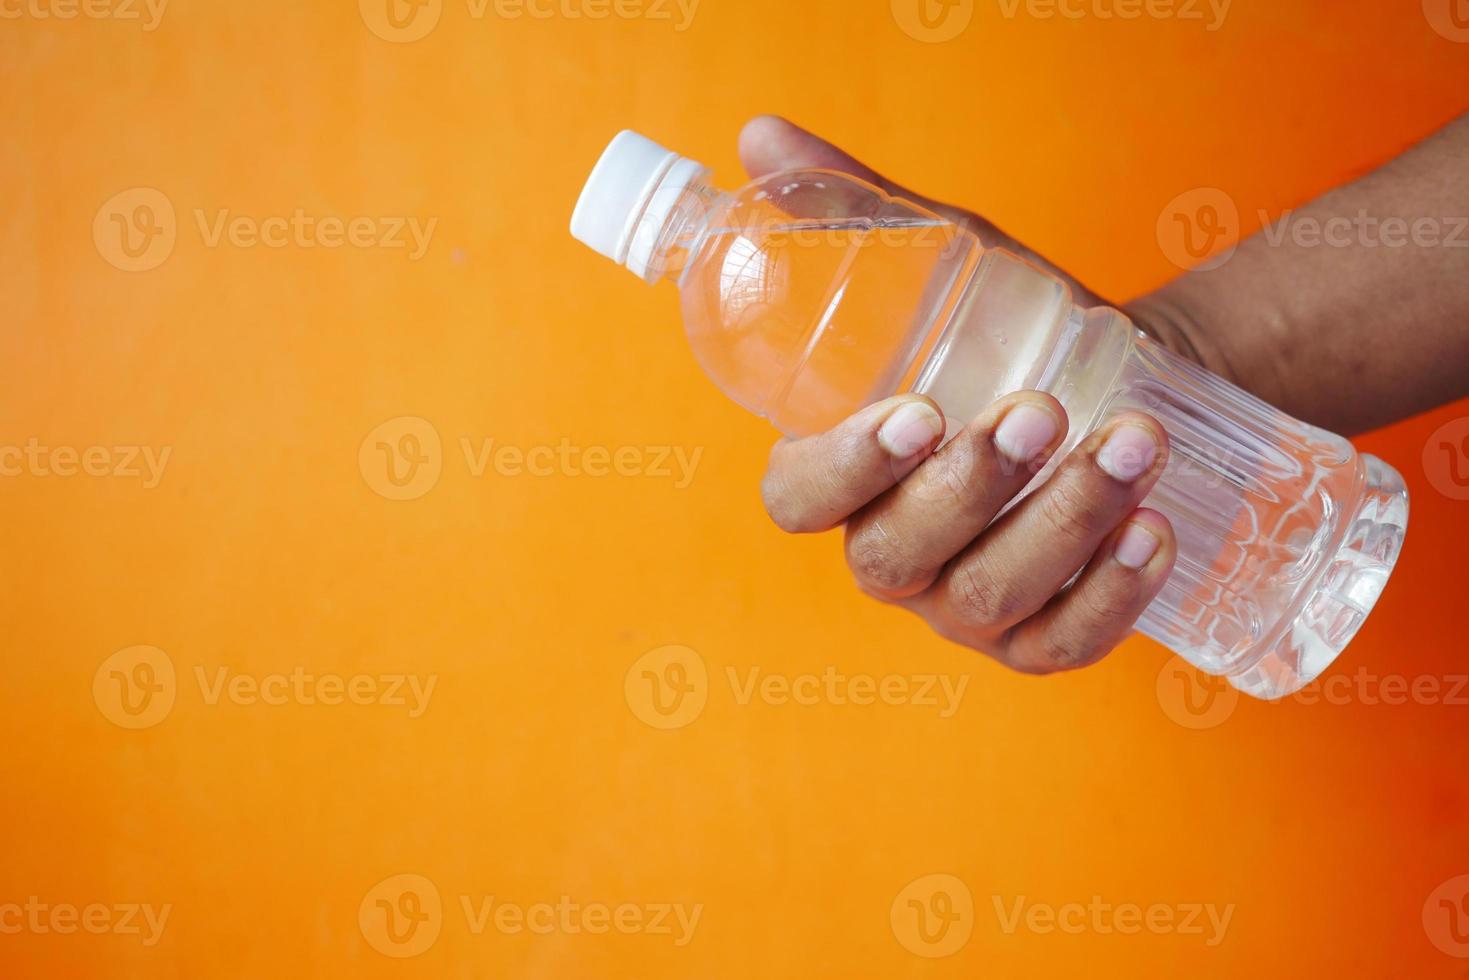 hand golding fresh drinking water bottle photo